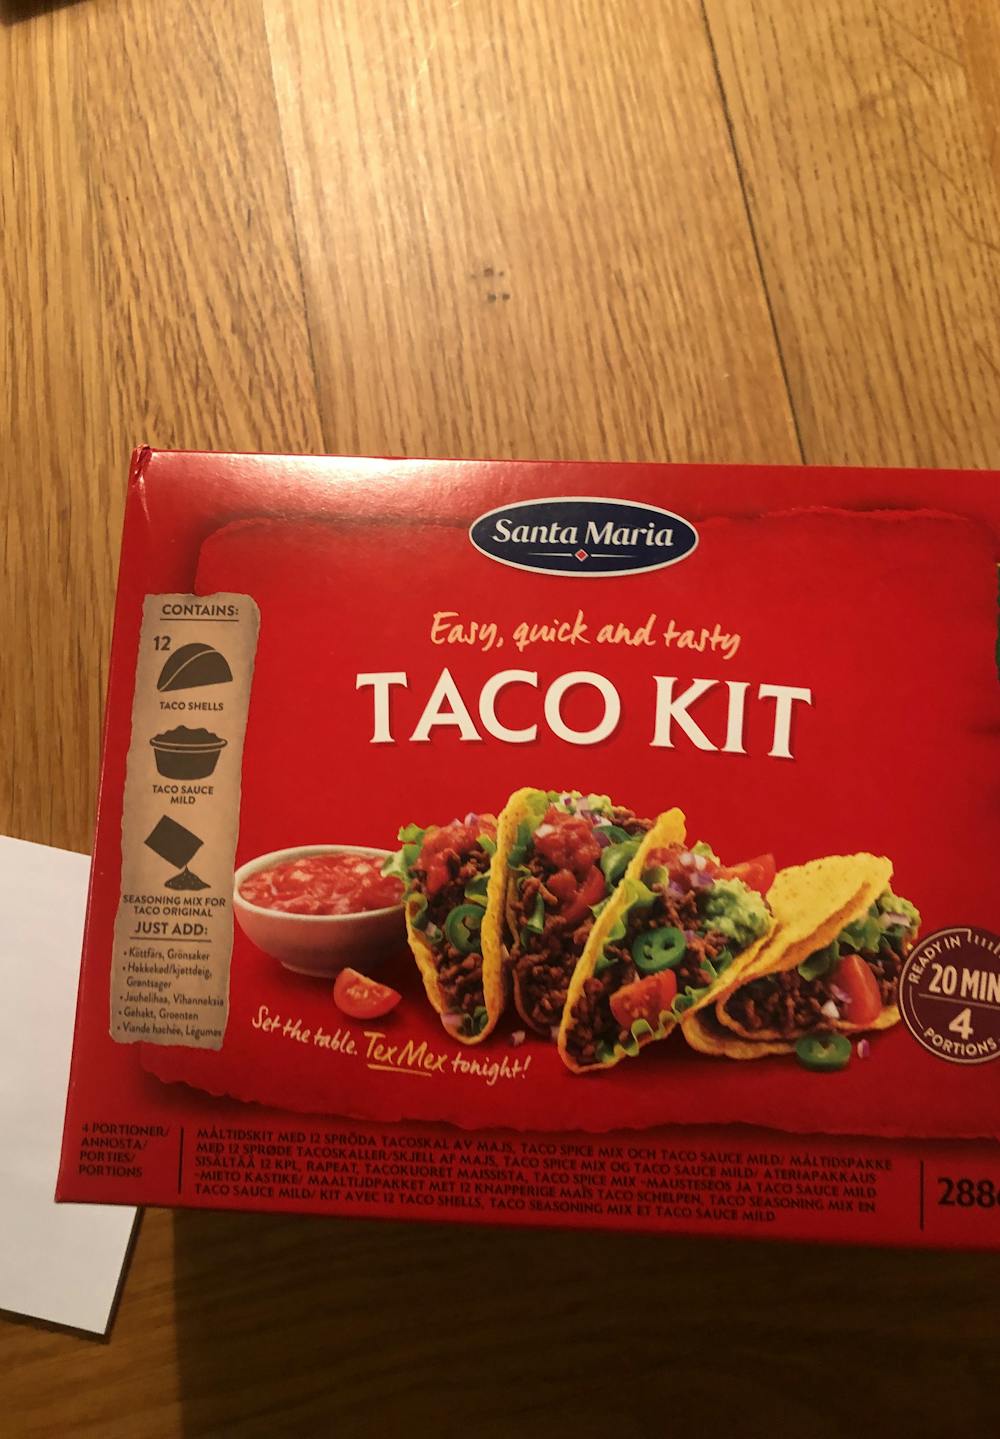 Taco kit, Santa Maria